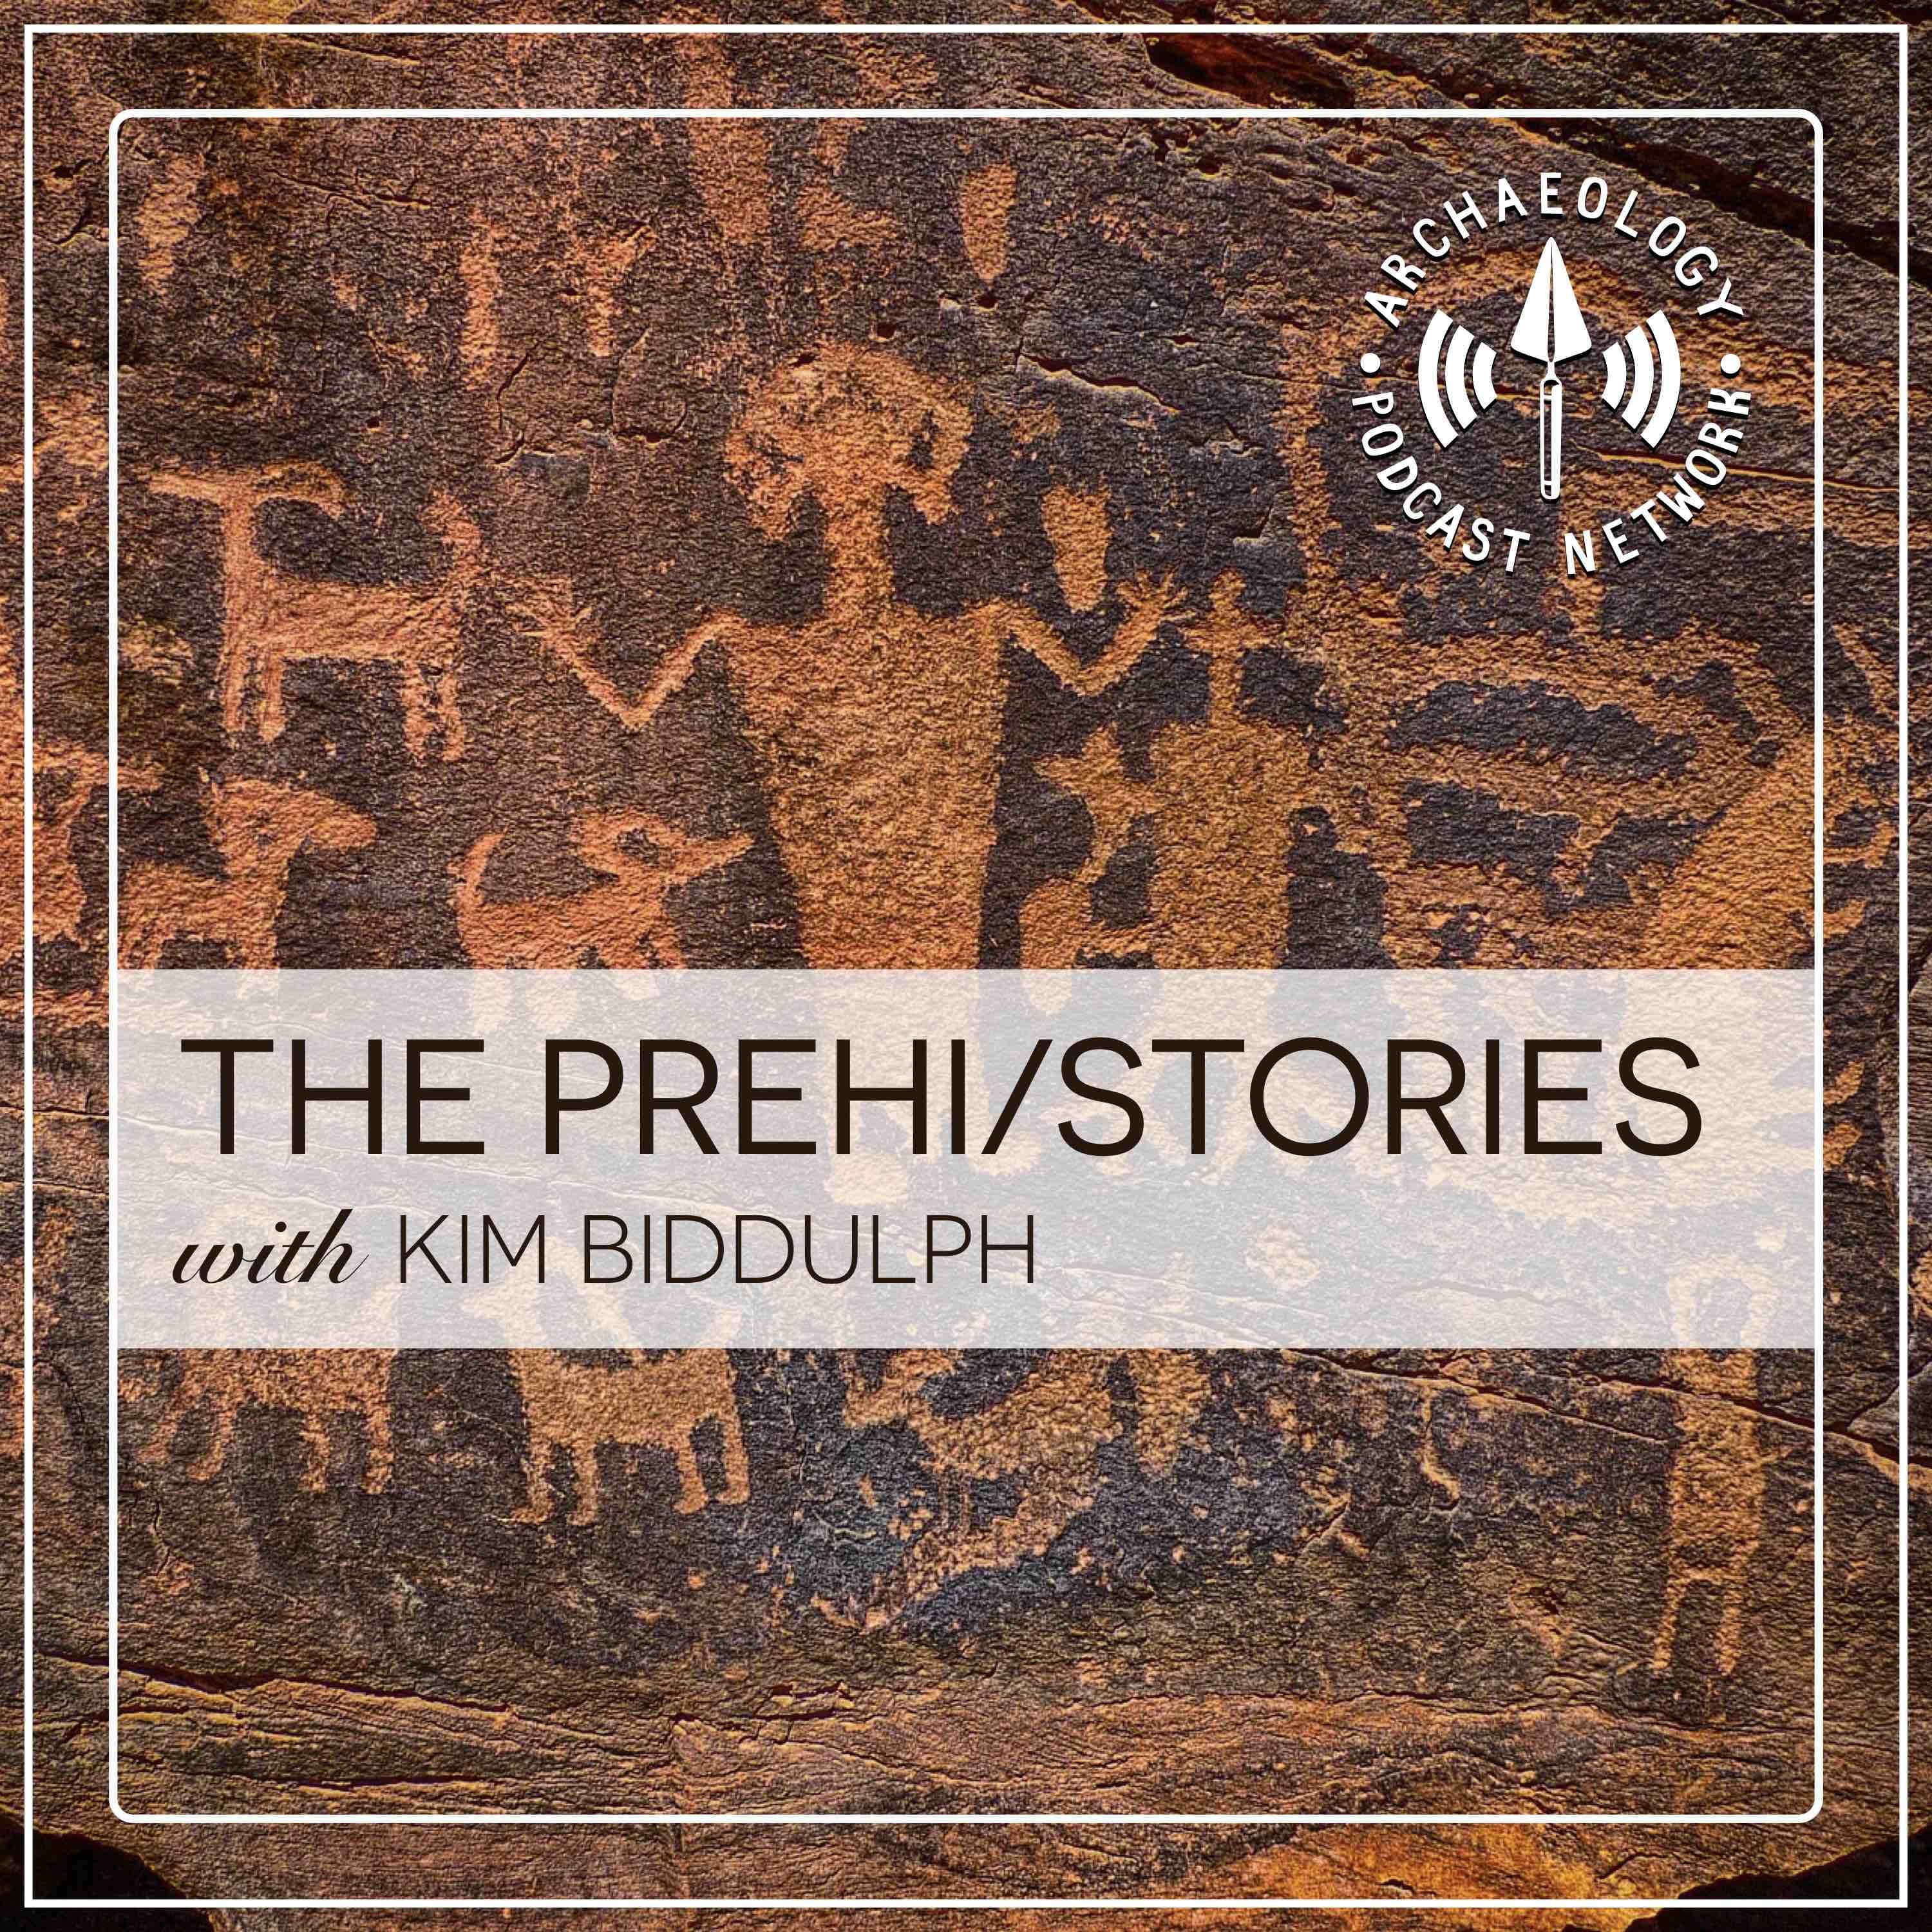 Prehis/Stories